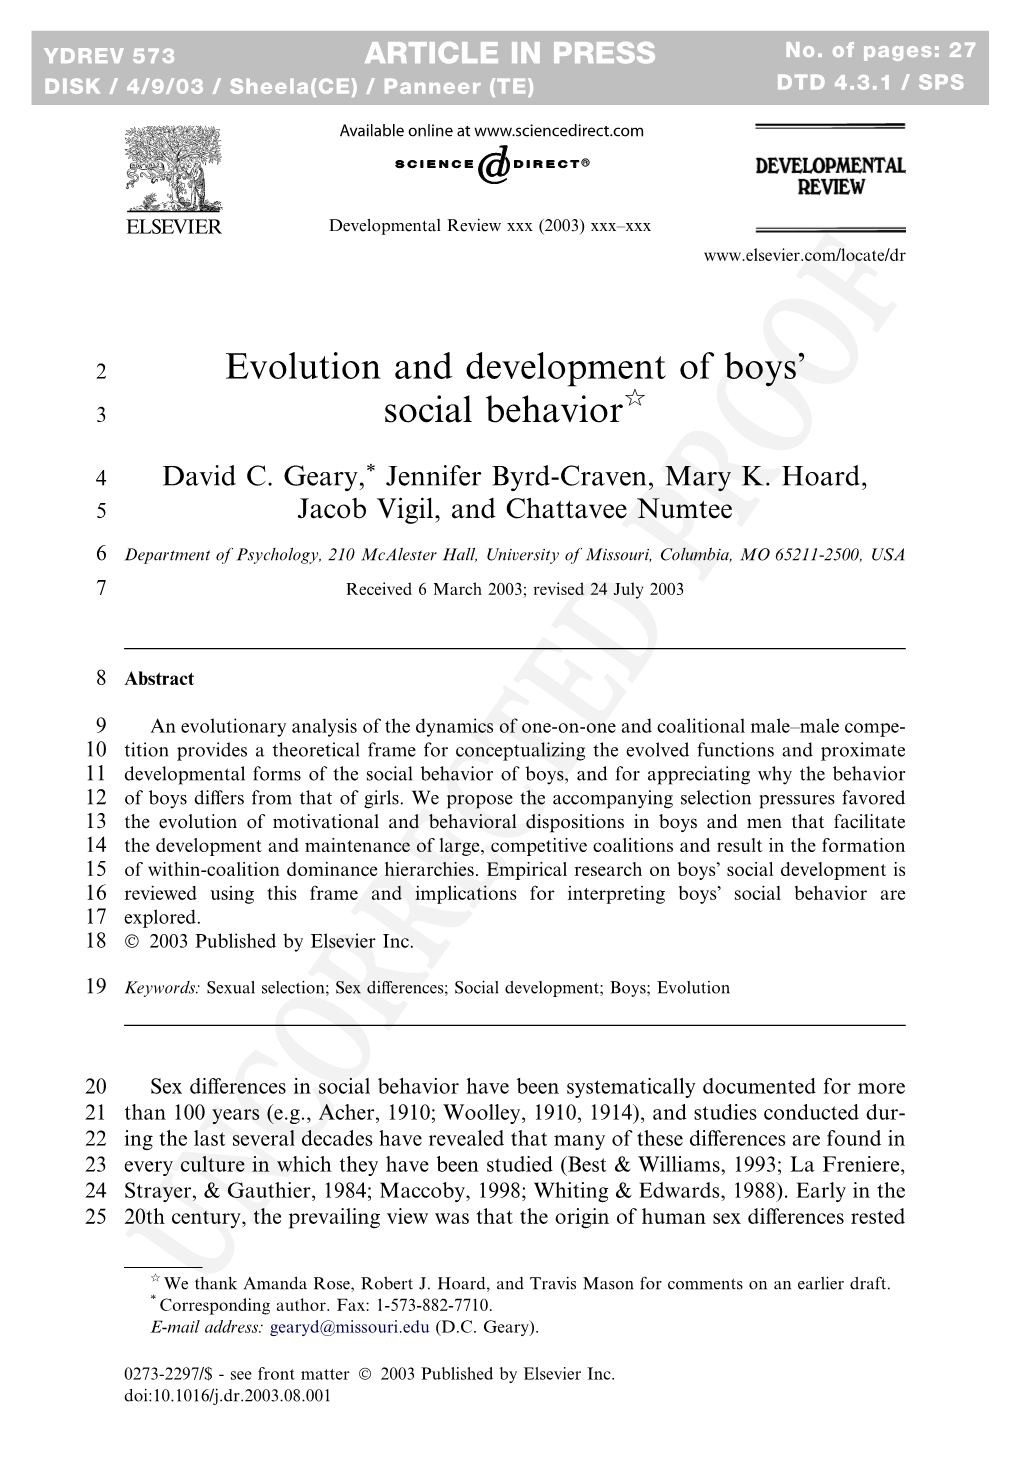 Evolution and Development of Boys' Social Behavior